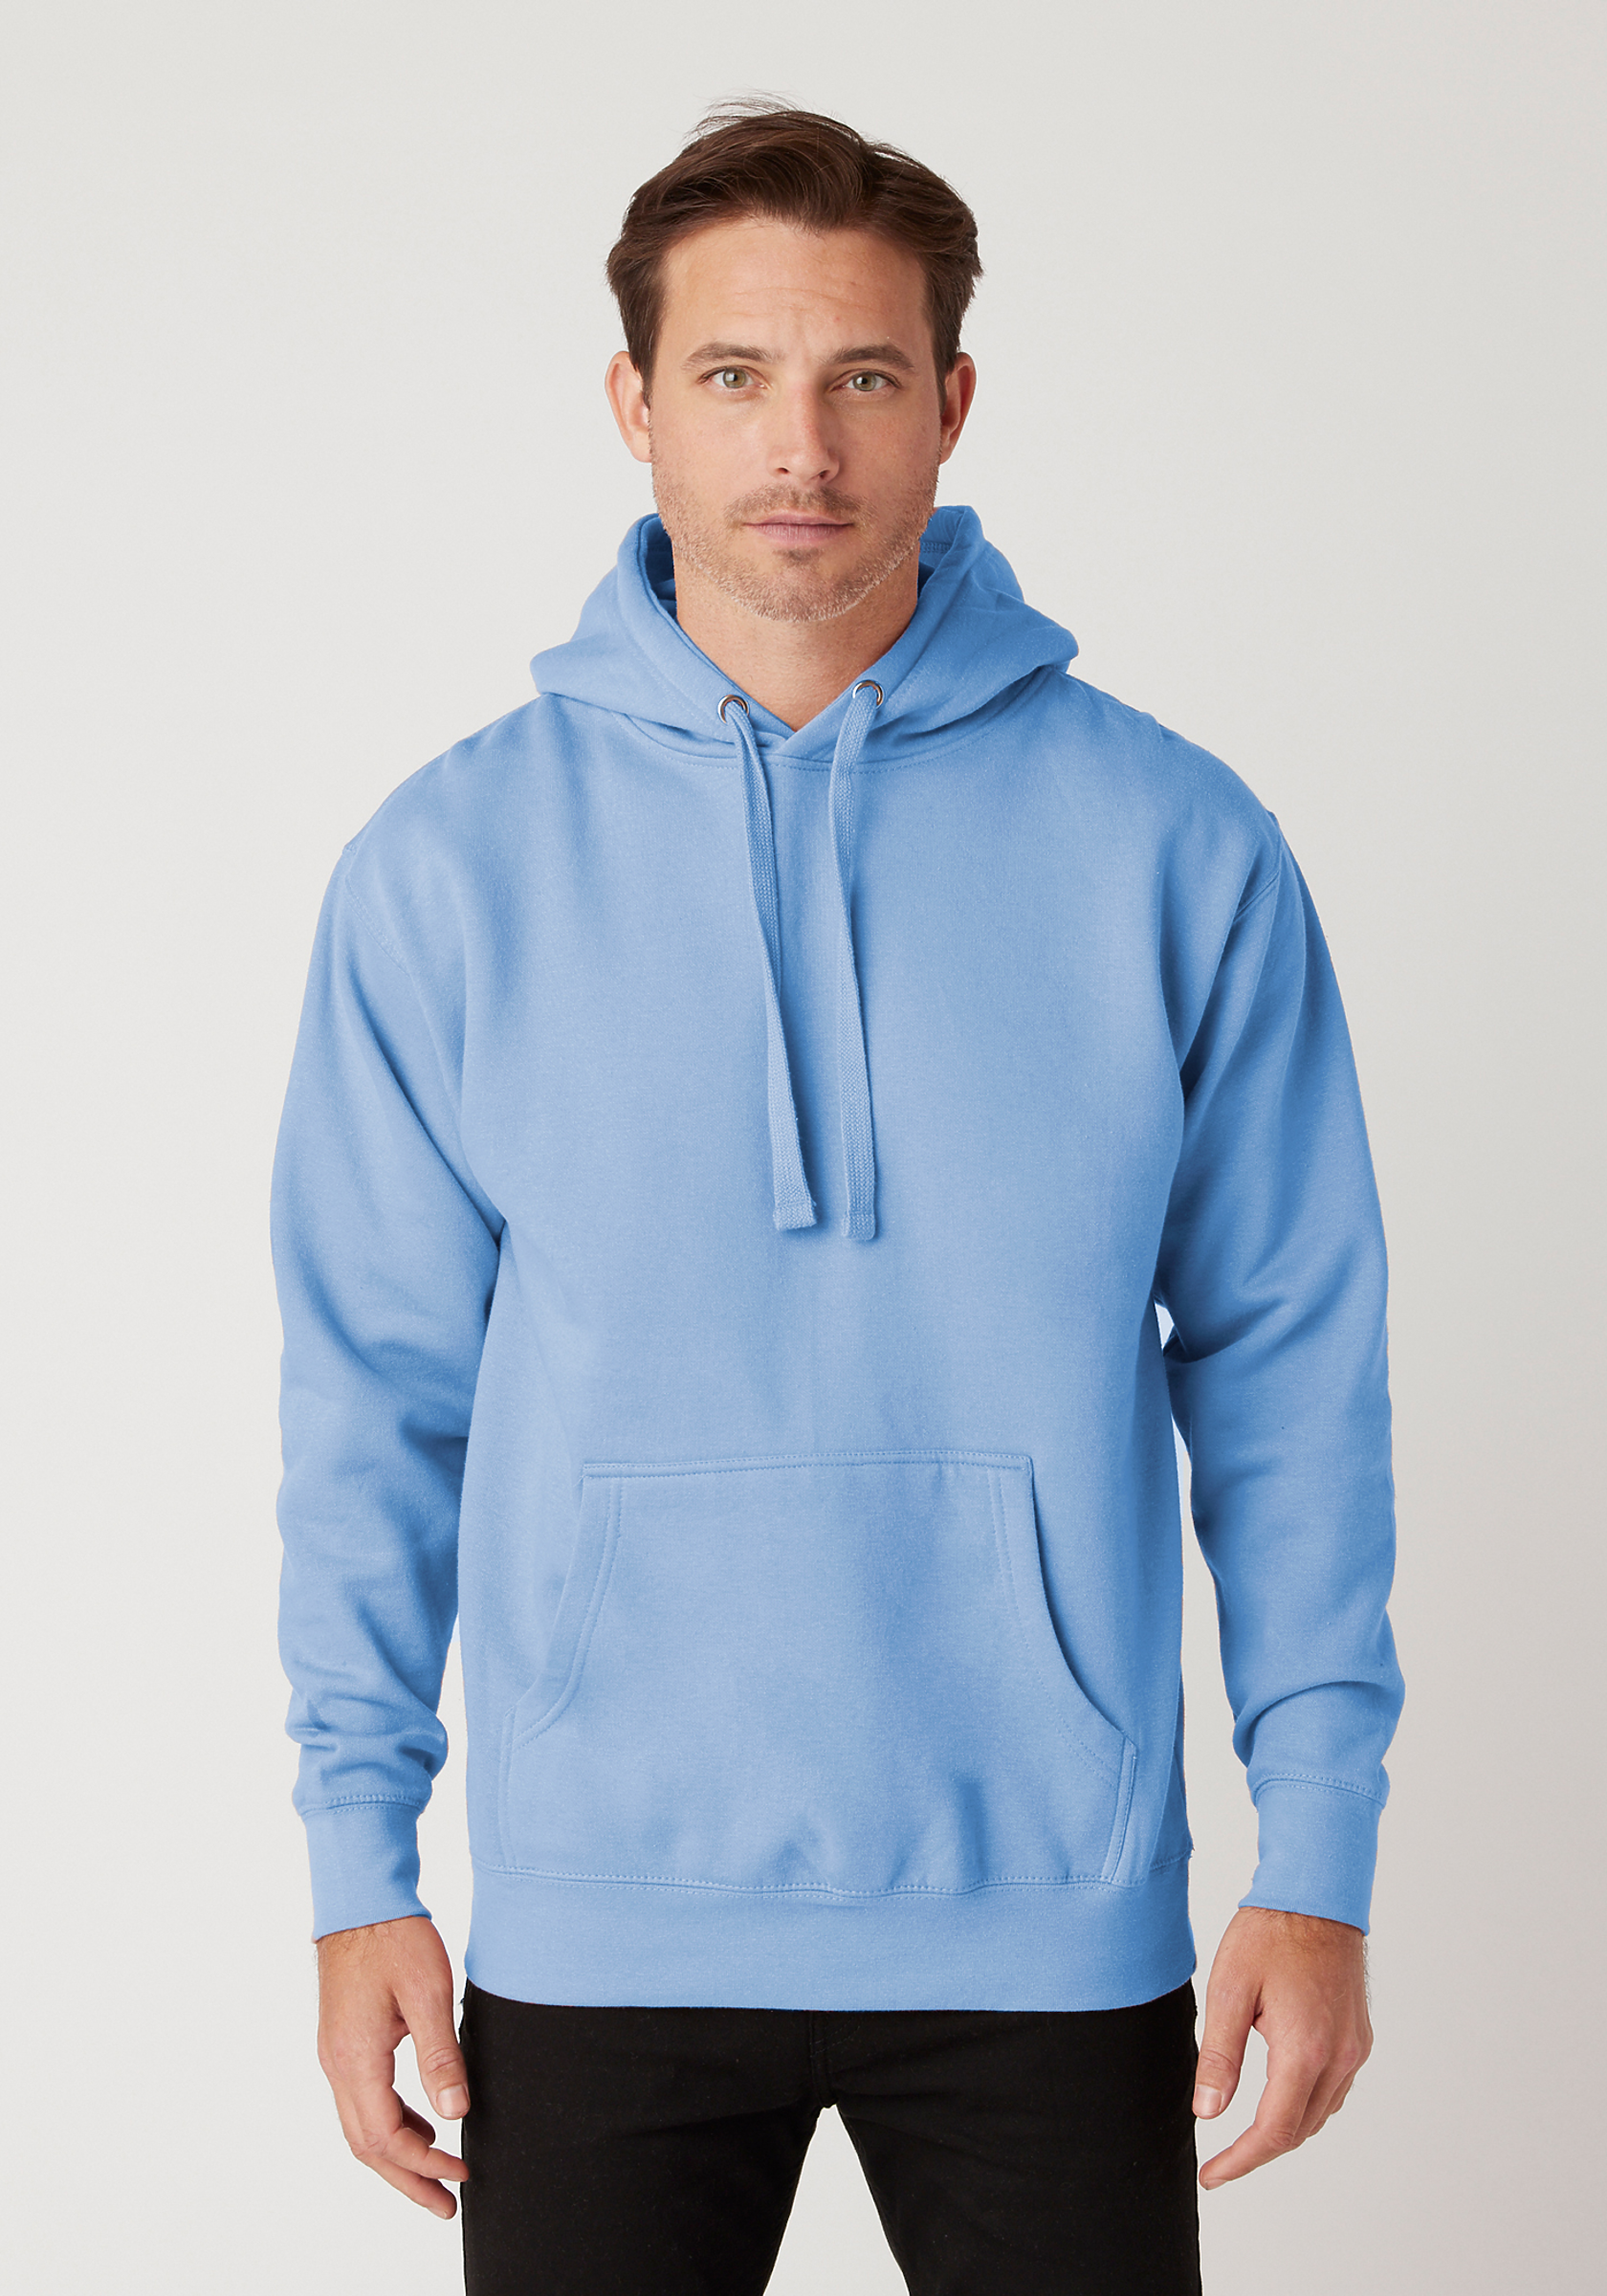 Unisex Poly-Cotton Fleece Full-Zip Hooded Sweatshirt - GOLD - L